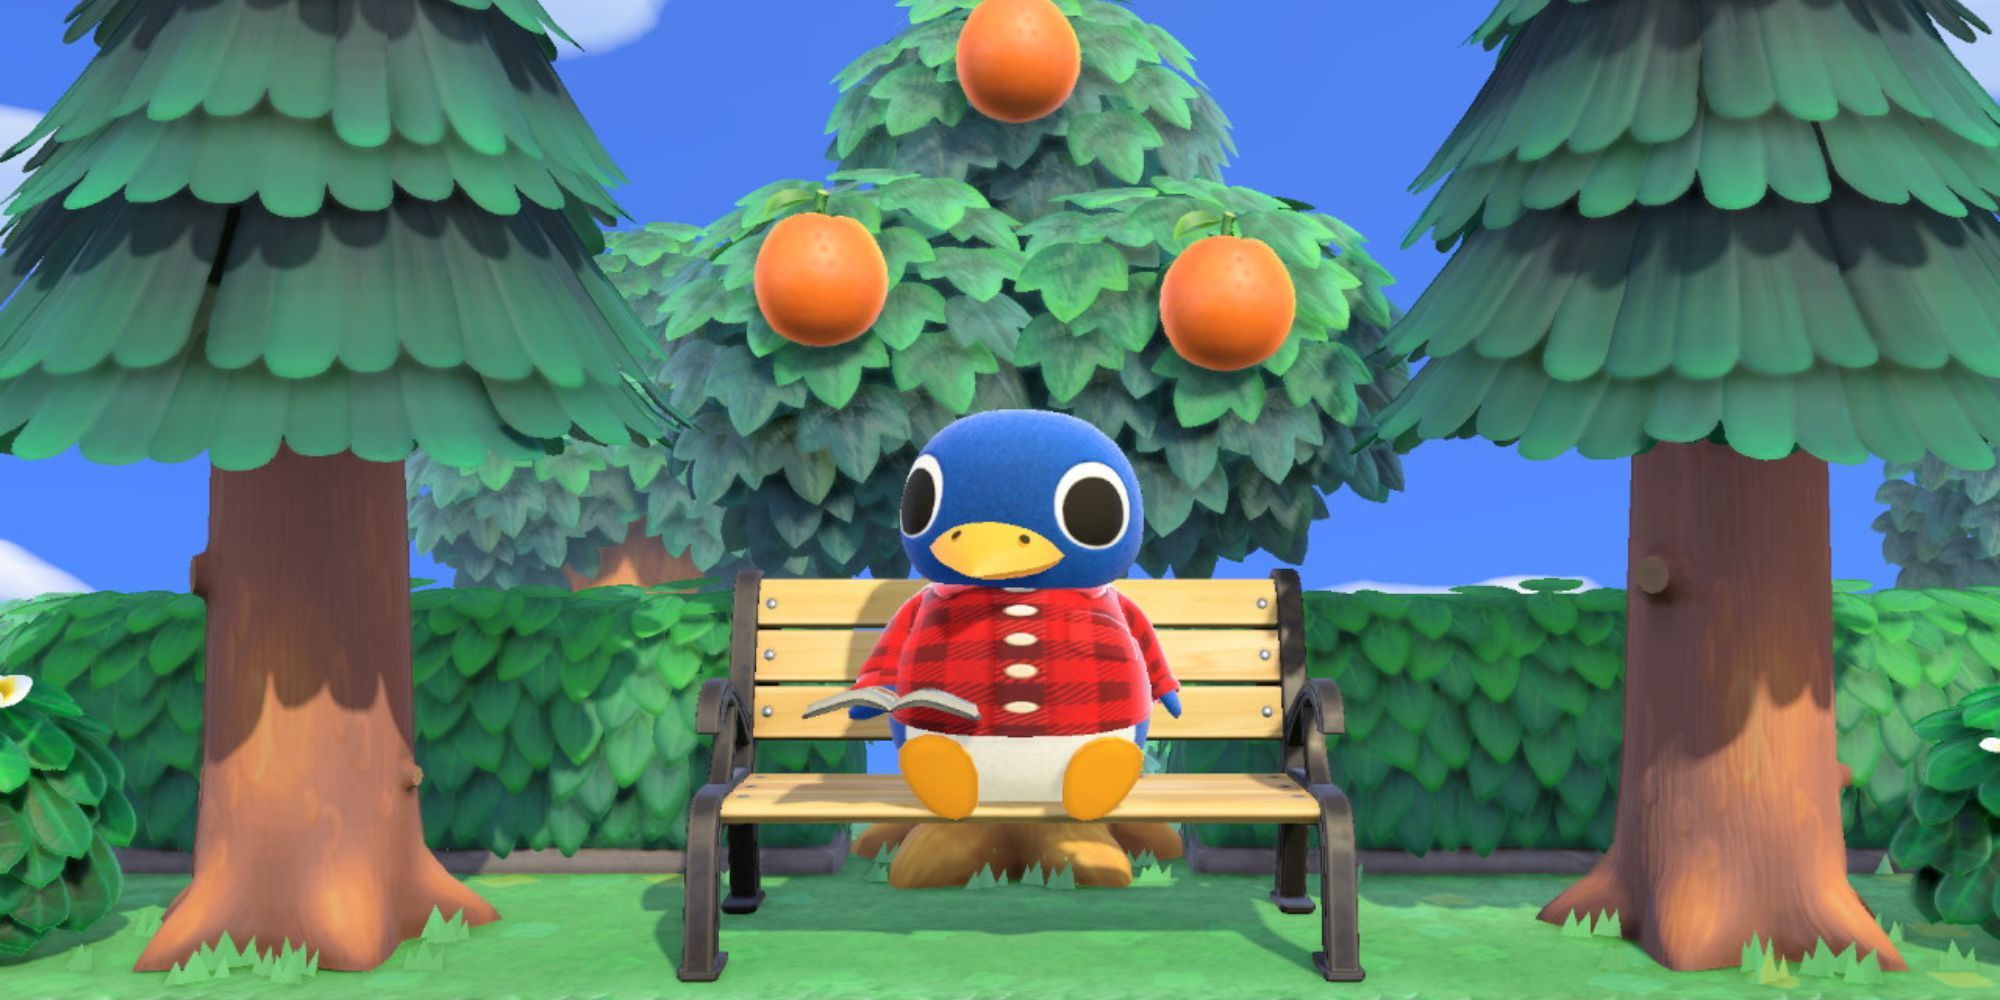 Roald reads a book on a bench beneath an orange tree 